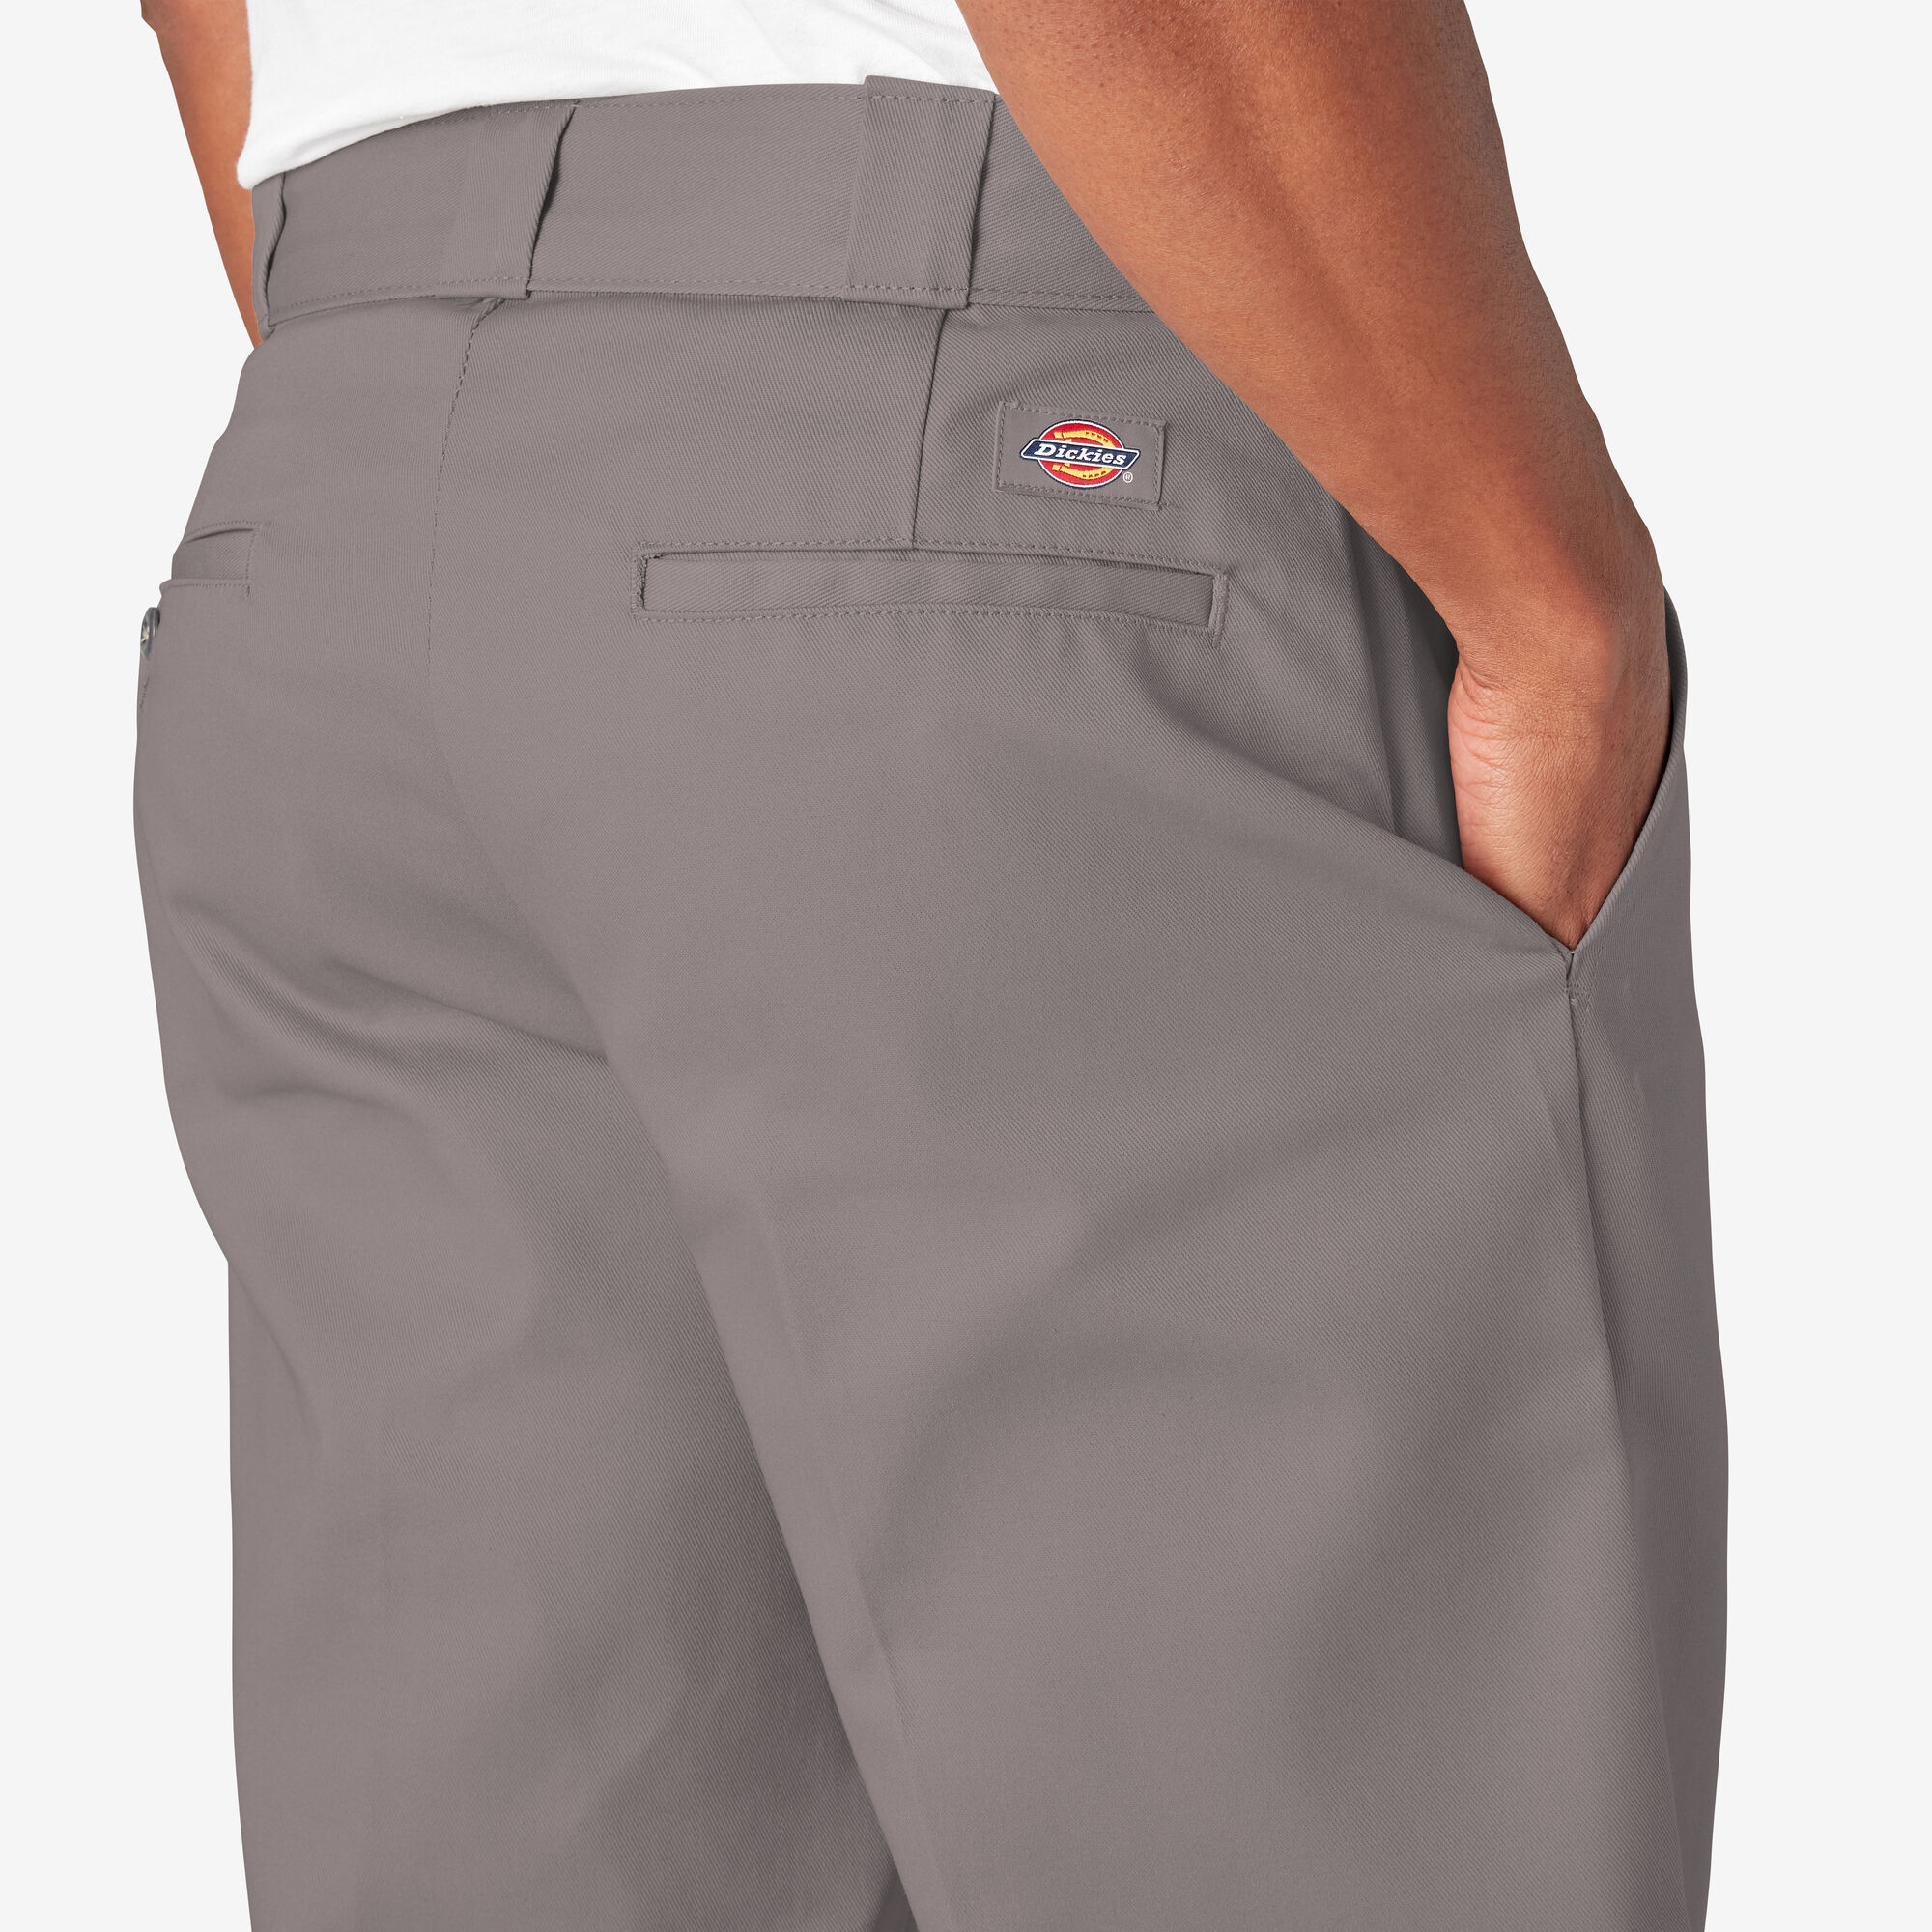 Dickies Original 874® Work Pants 